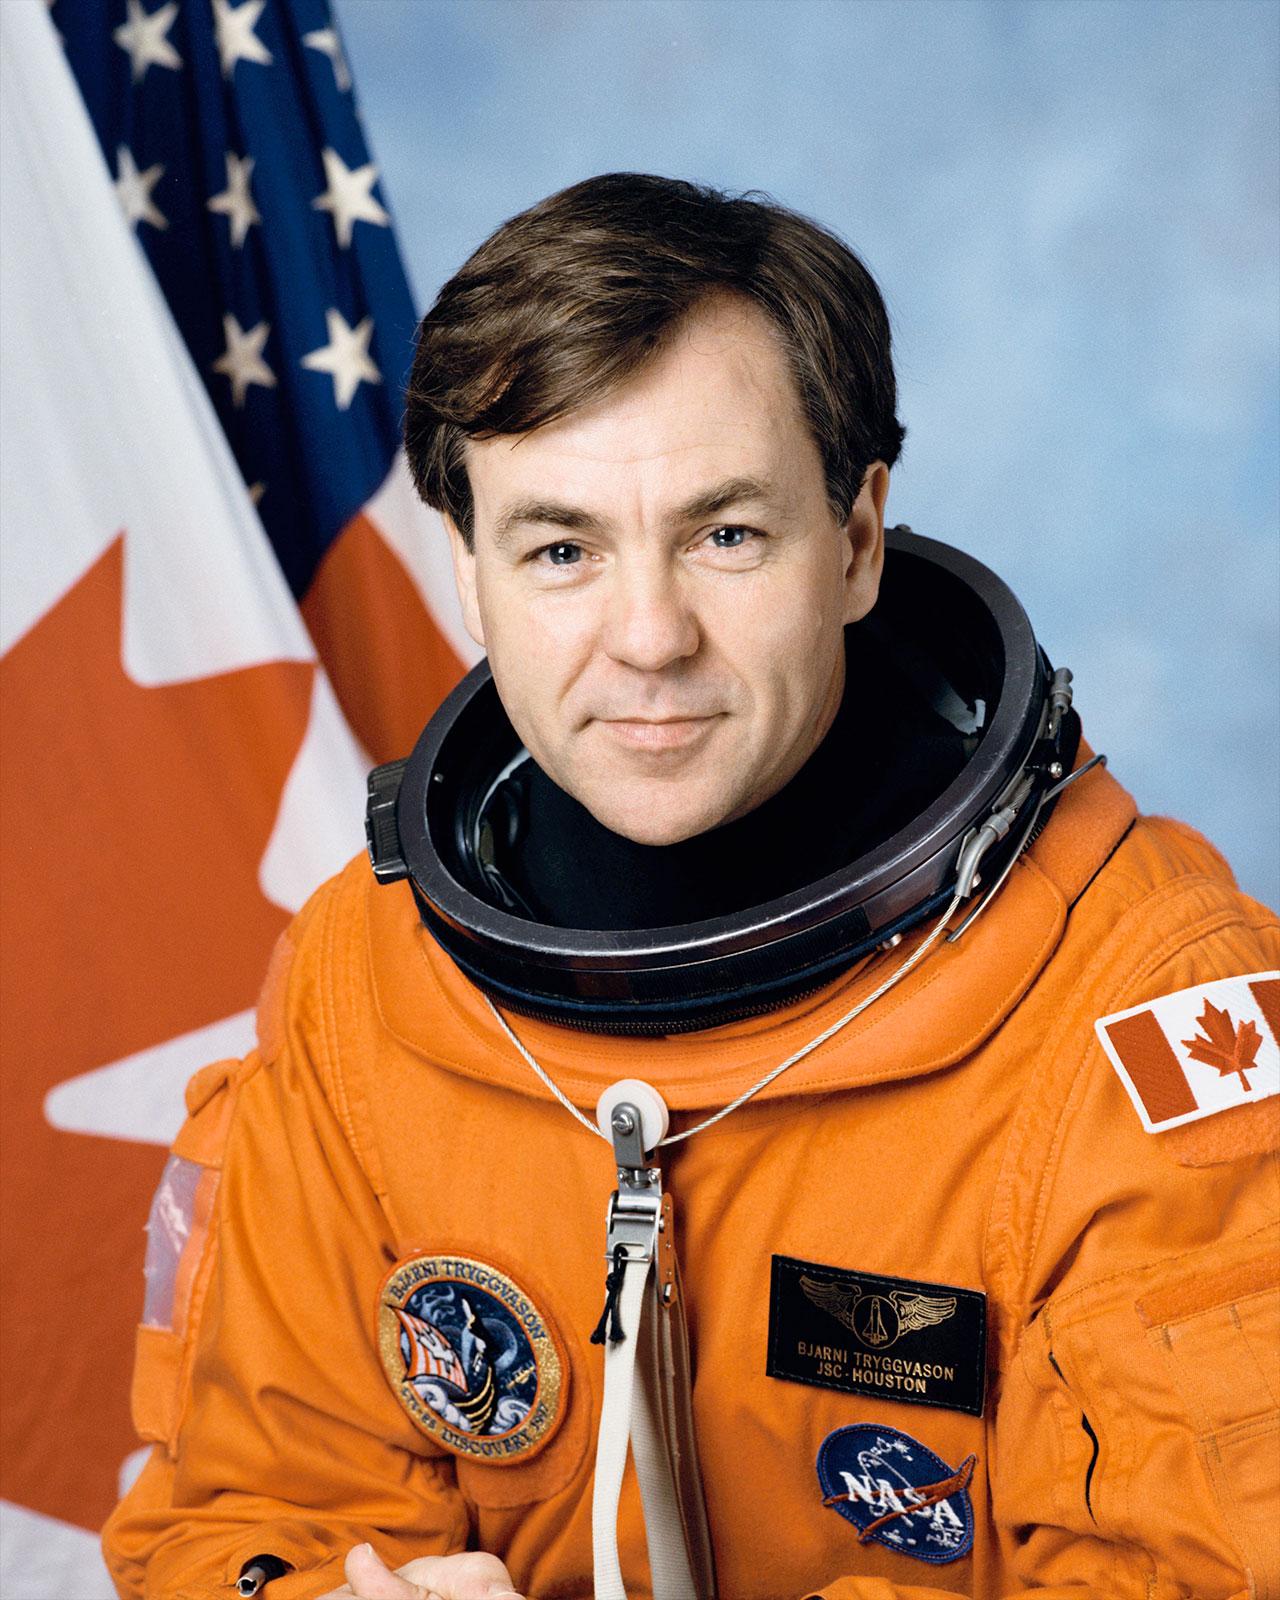 Official portrait of Canadian astronaut Bjarni Tryggvason.